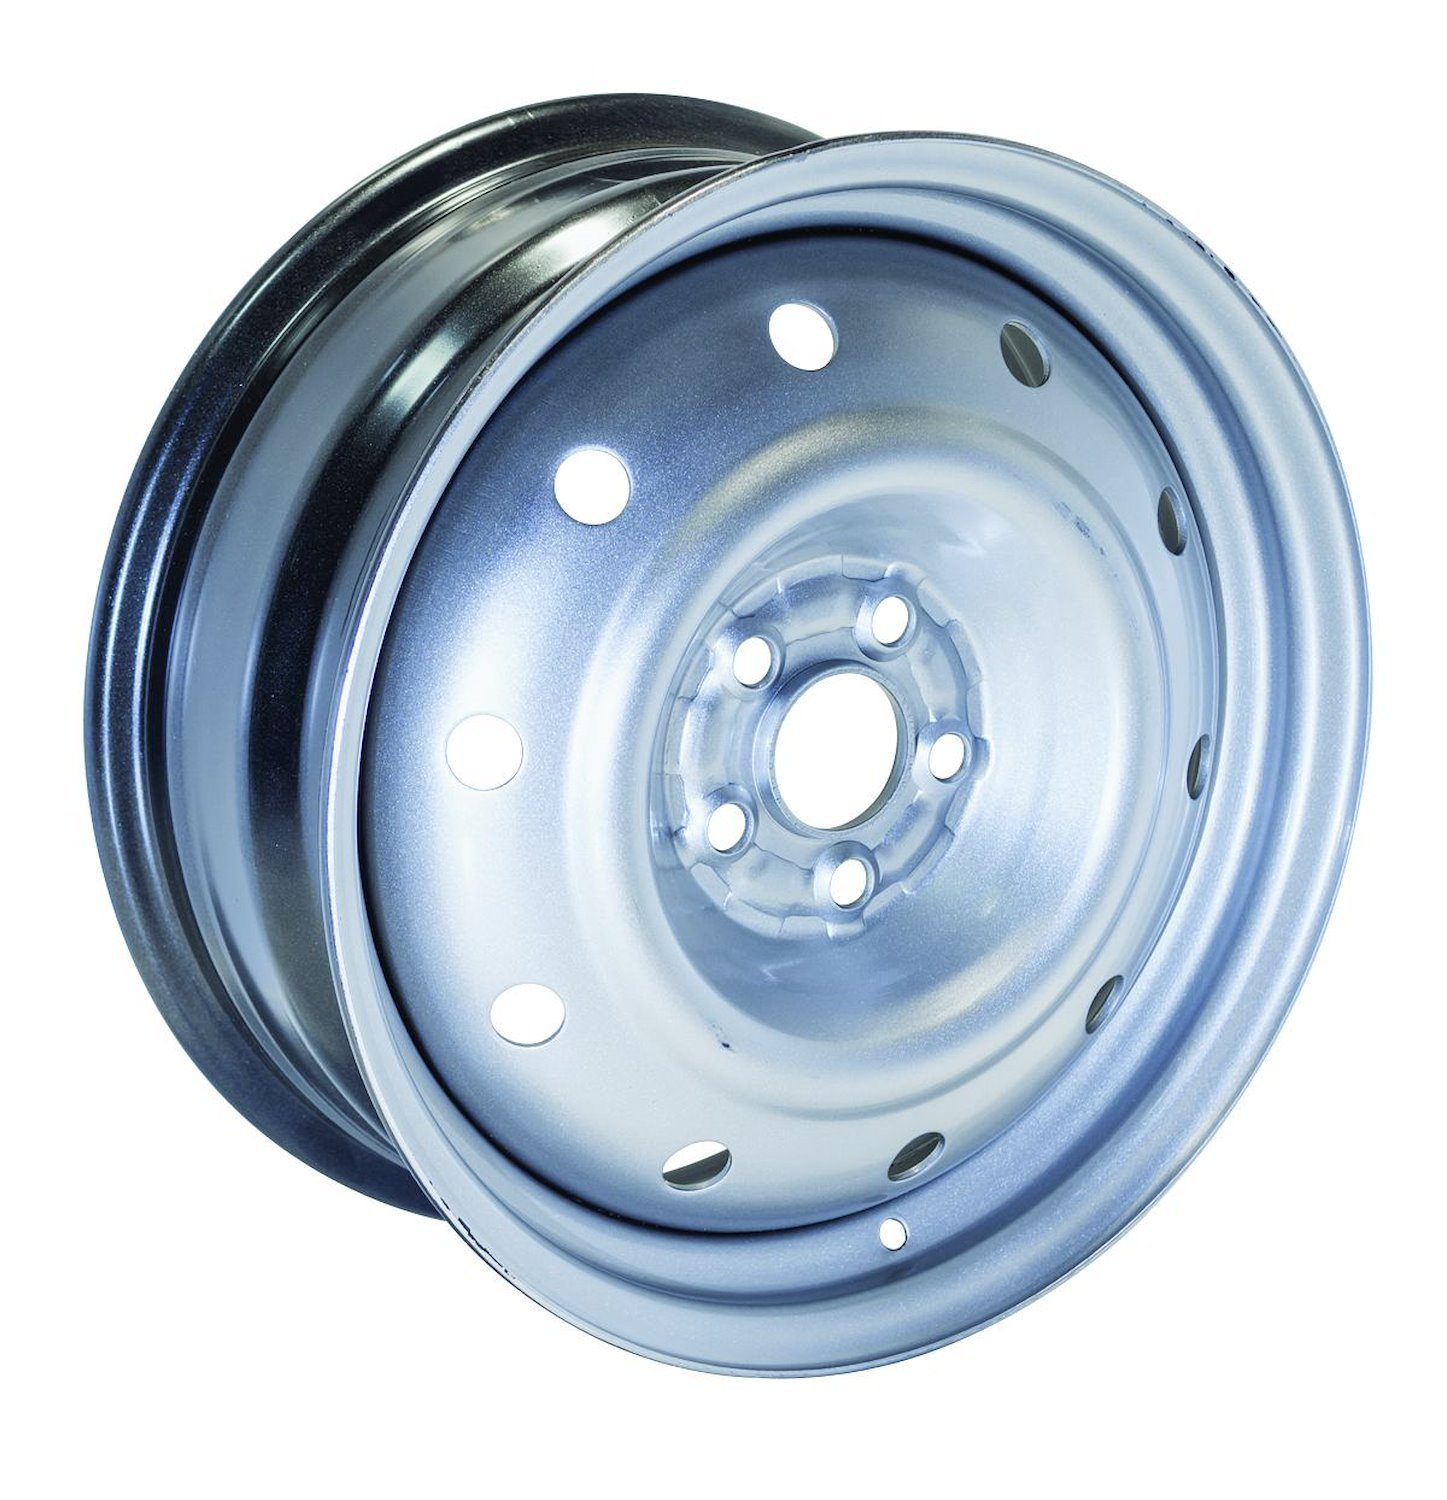 X46556 Steel Wheel [Size: 16" x 6.50"] Grey Finish